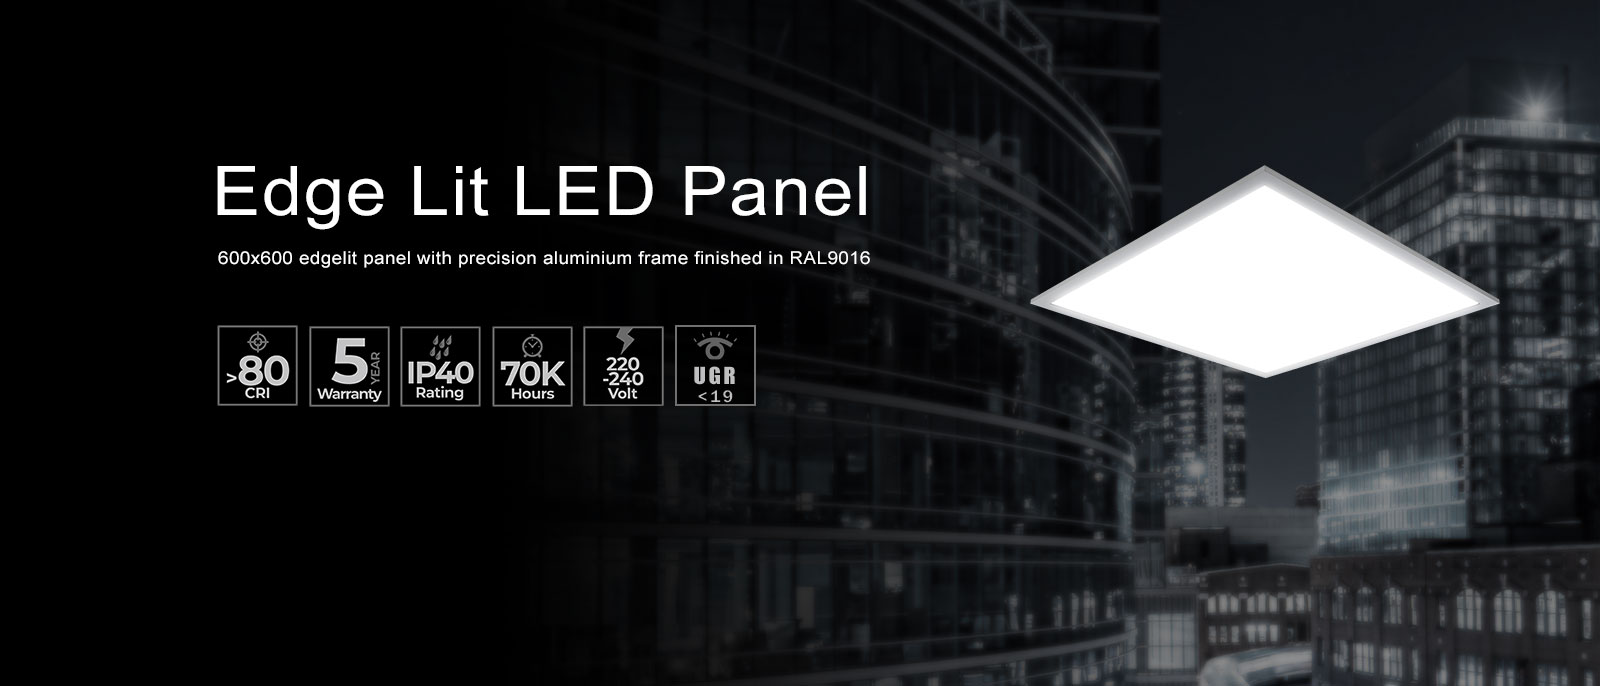 Edge lit led panel